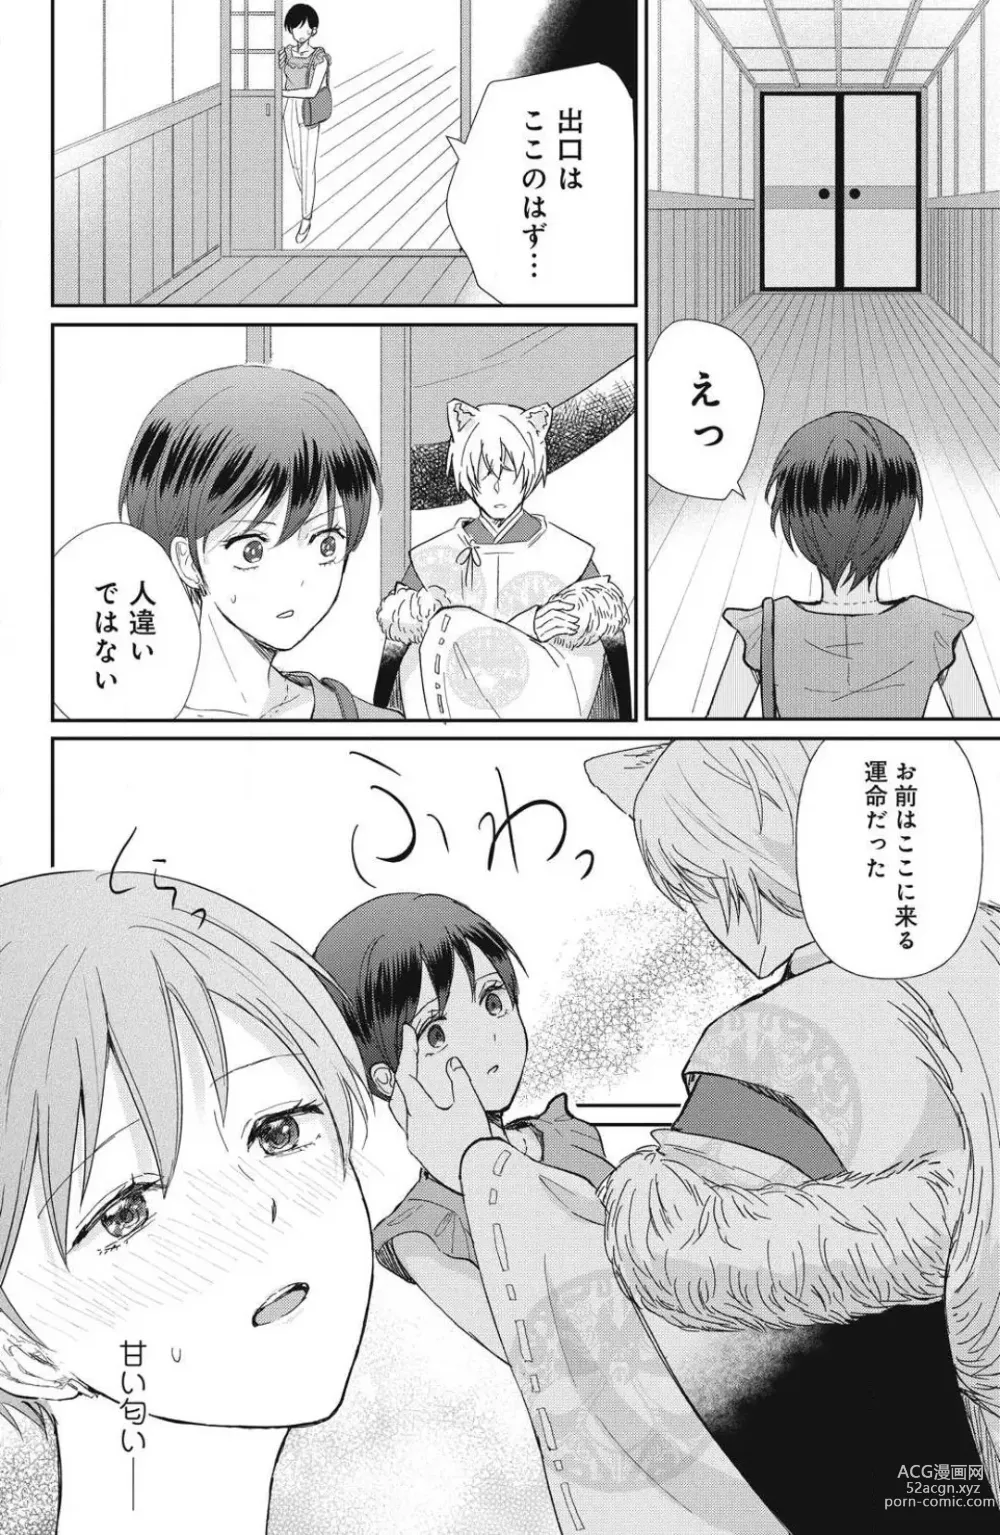 Page 12 of manga Oinu-sama no Kamikakushi Kon 1-4